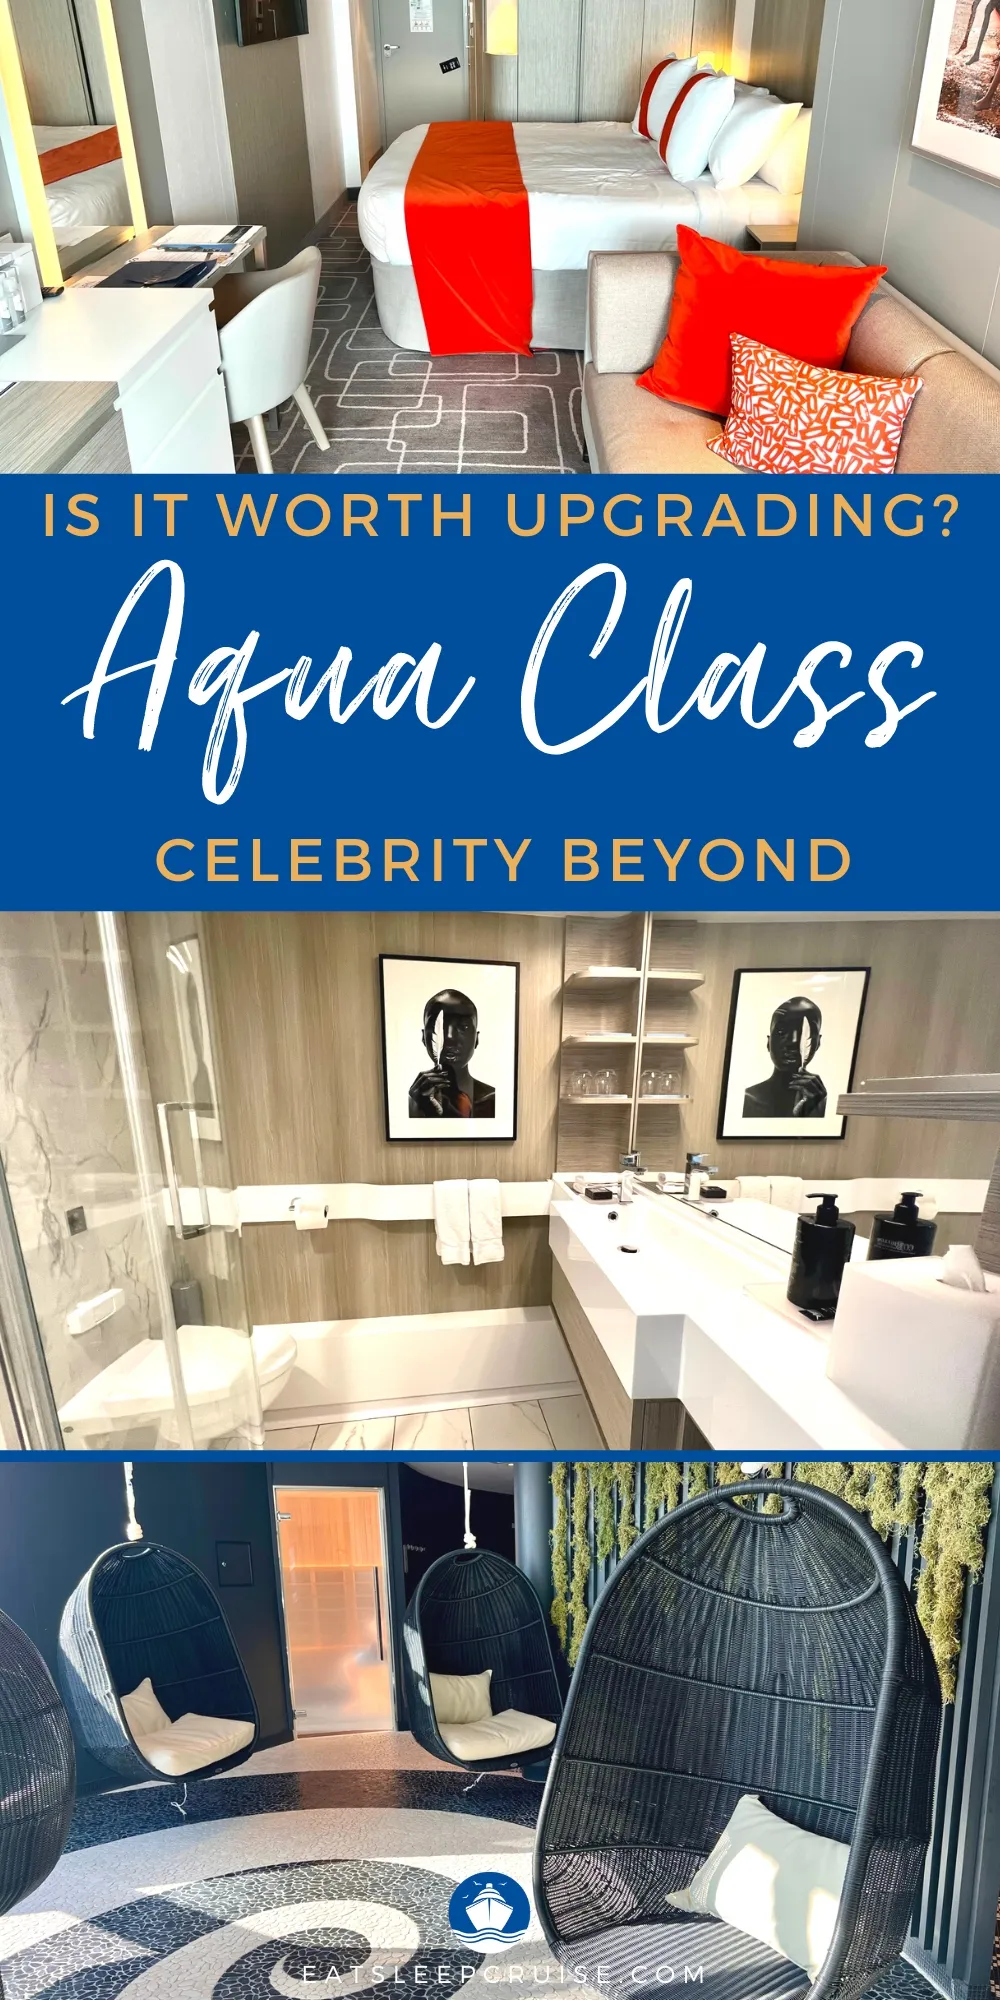 Celebrity AquaClass Stateroom